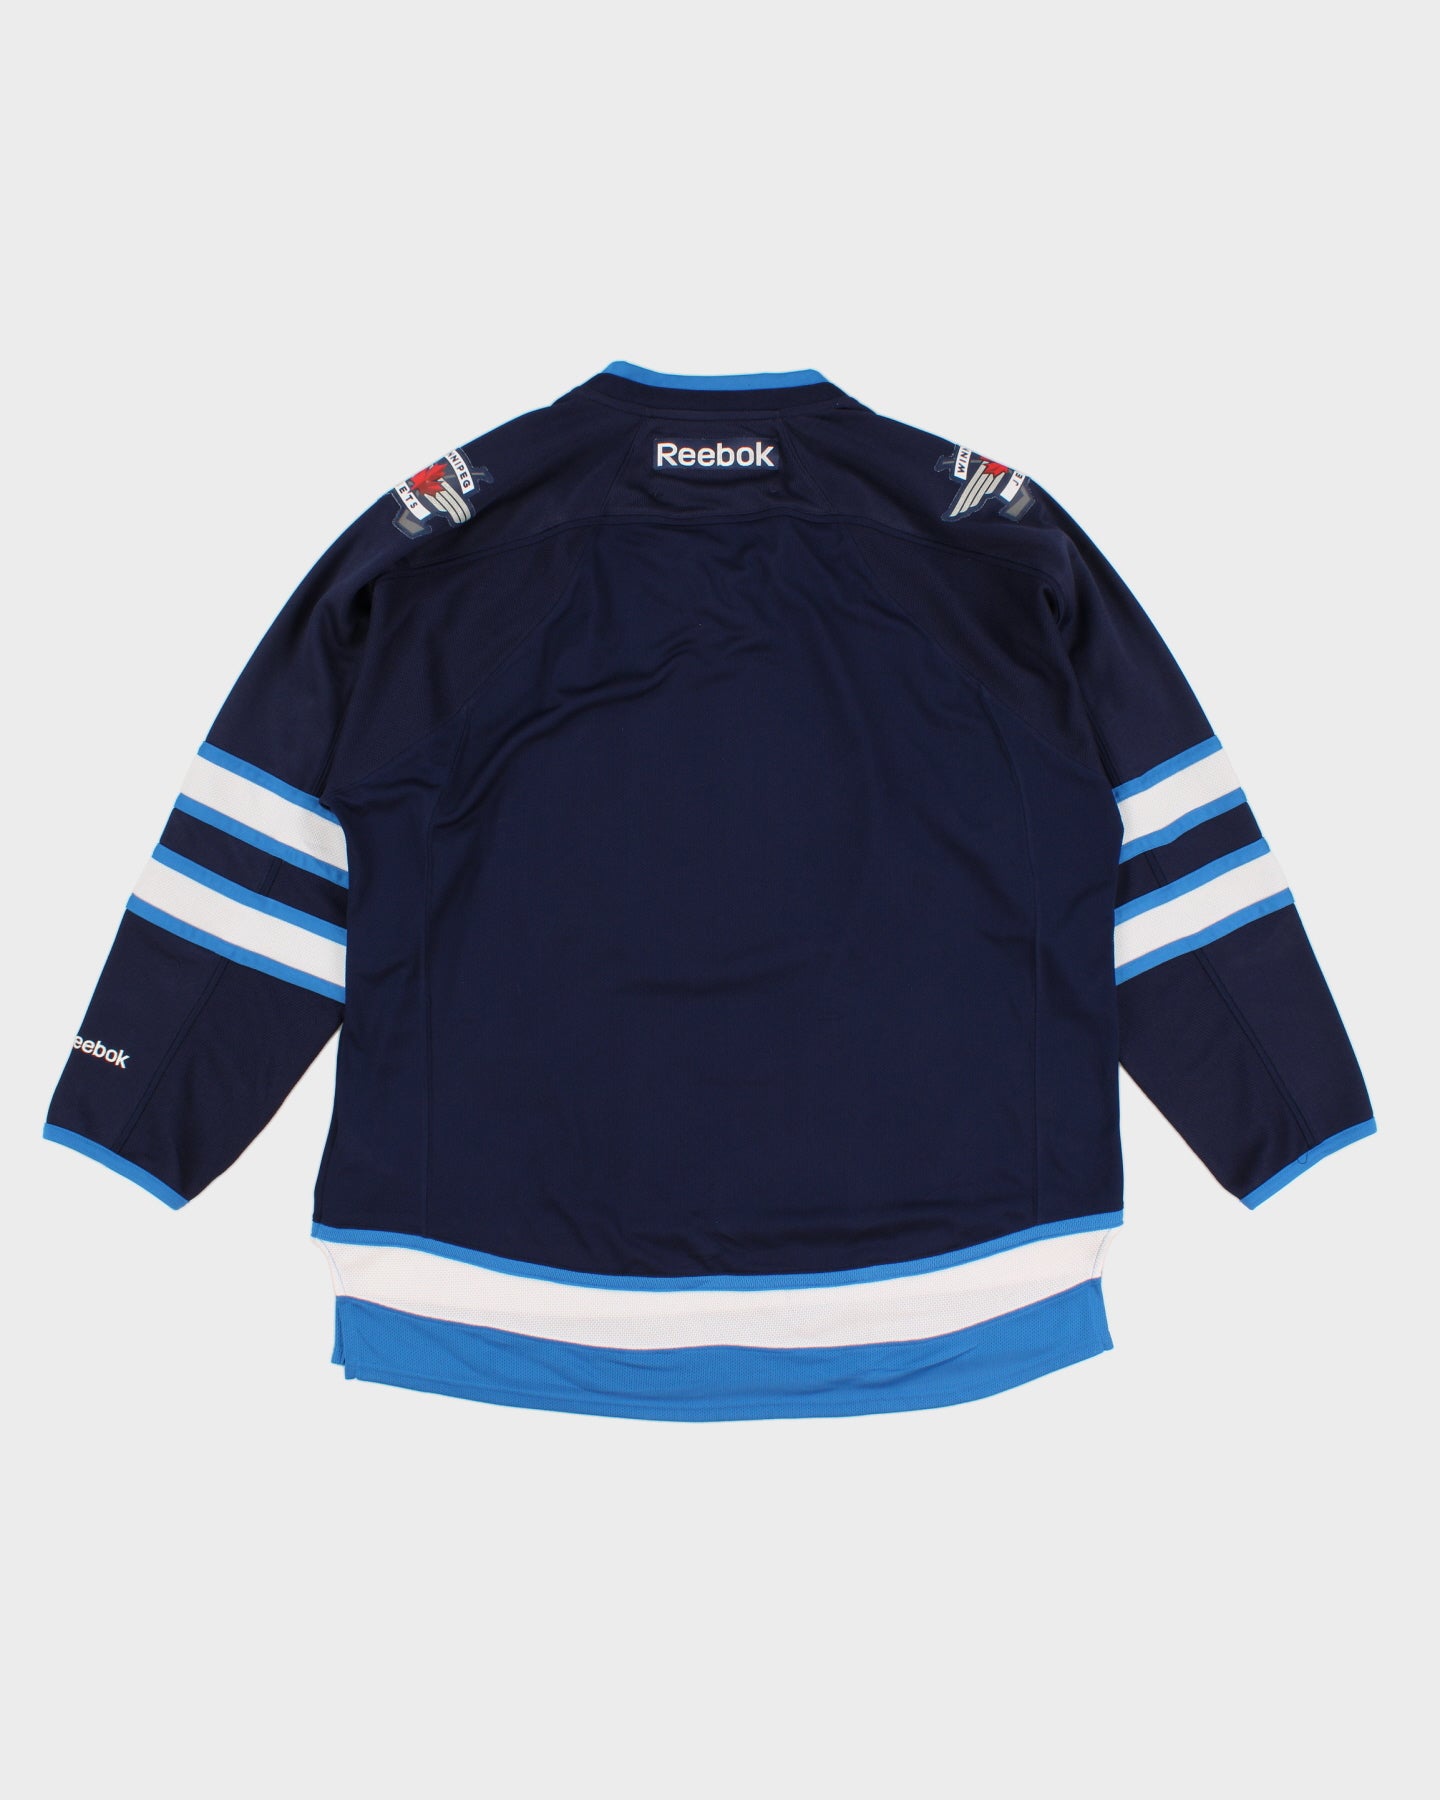 Winnipeg Jets Authentic Reebok NHL Hockey Jersey Size 54